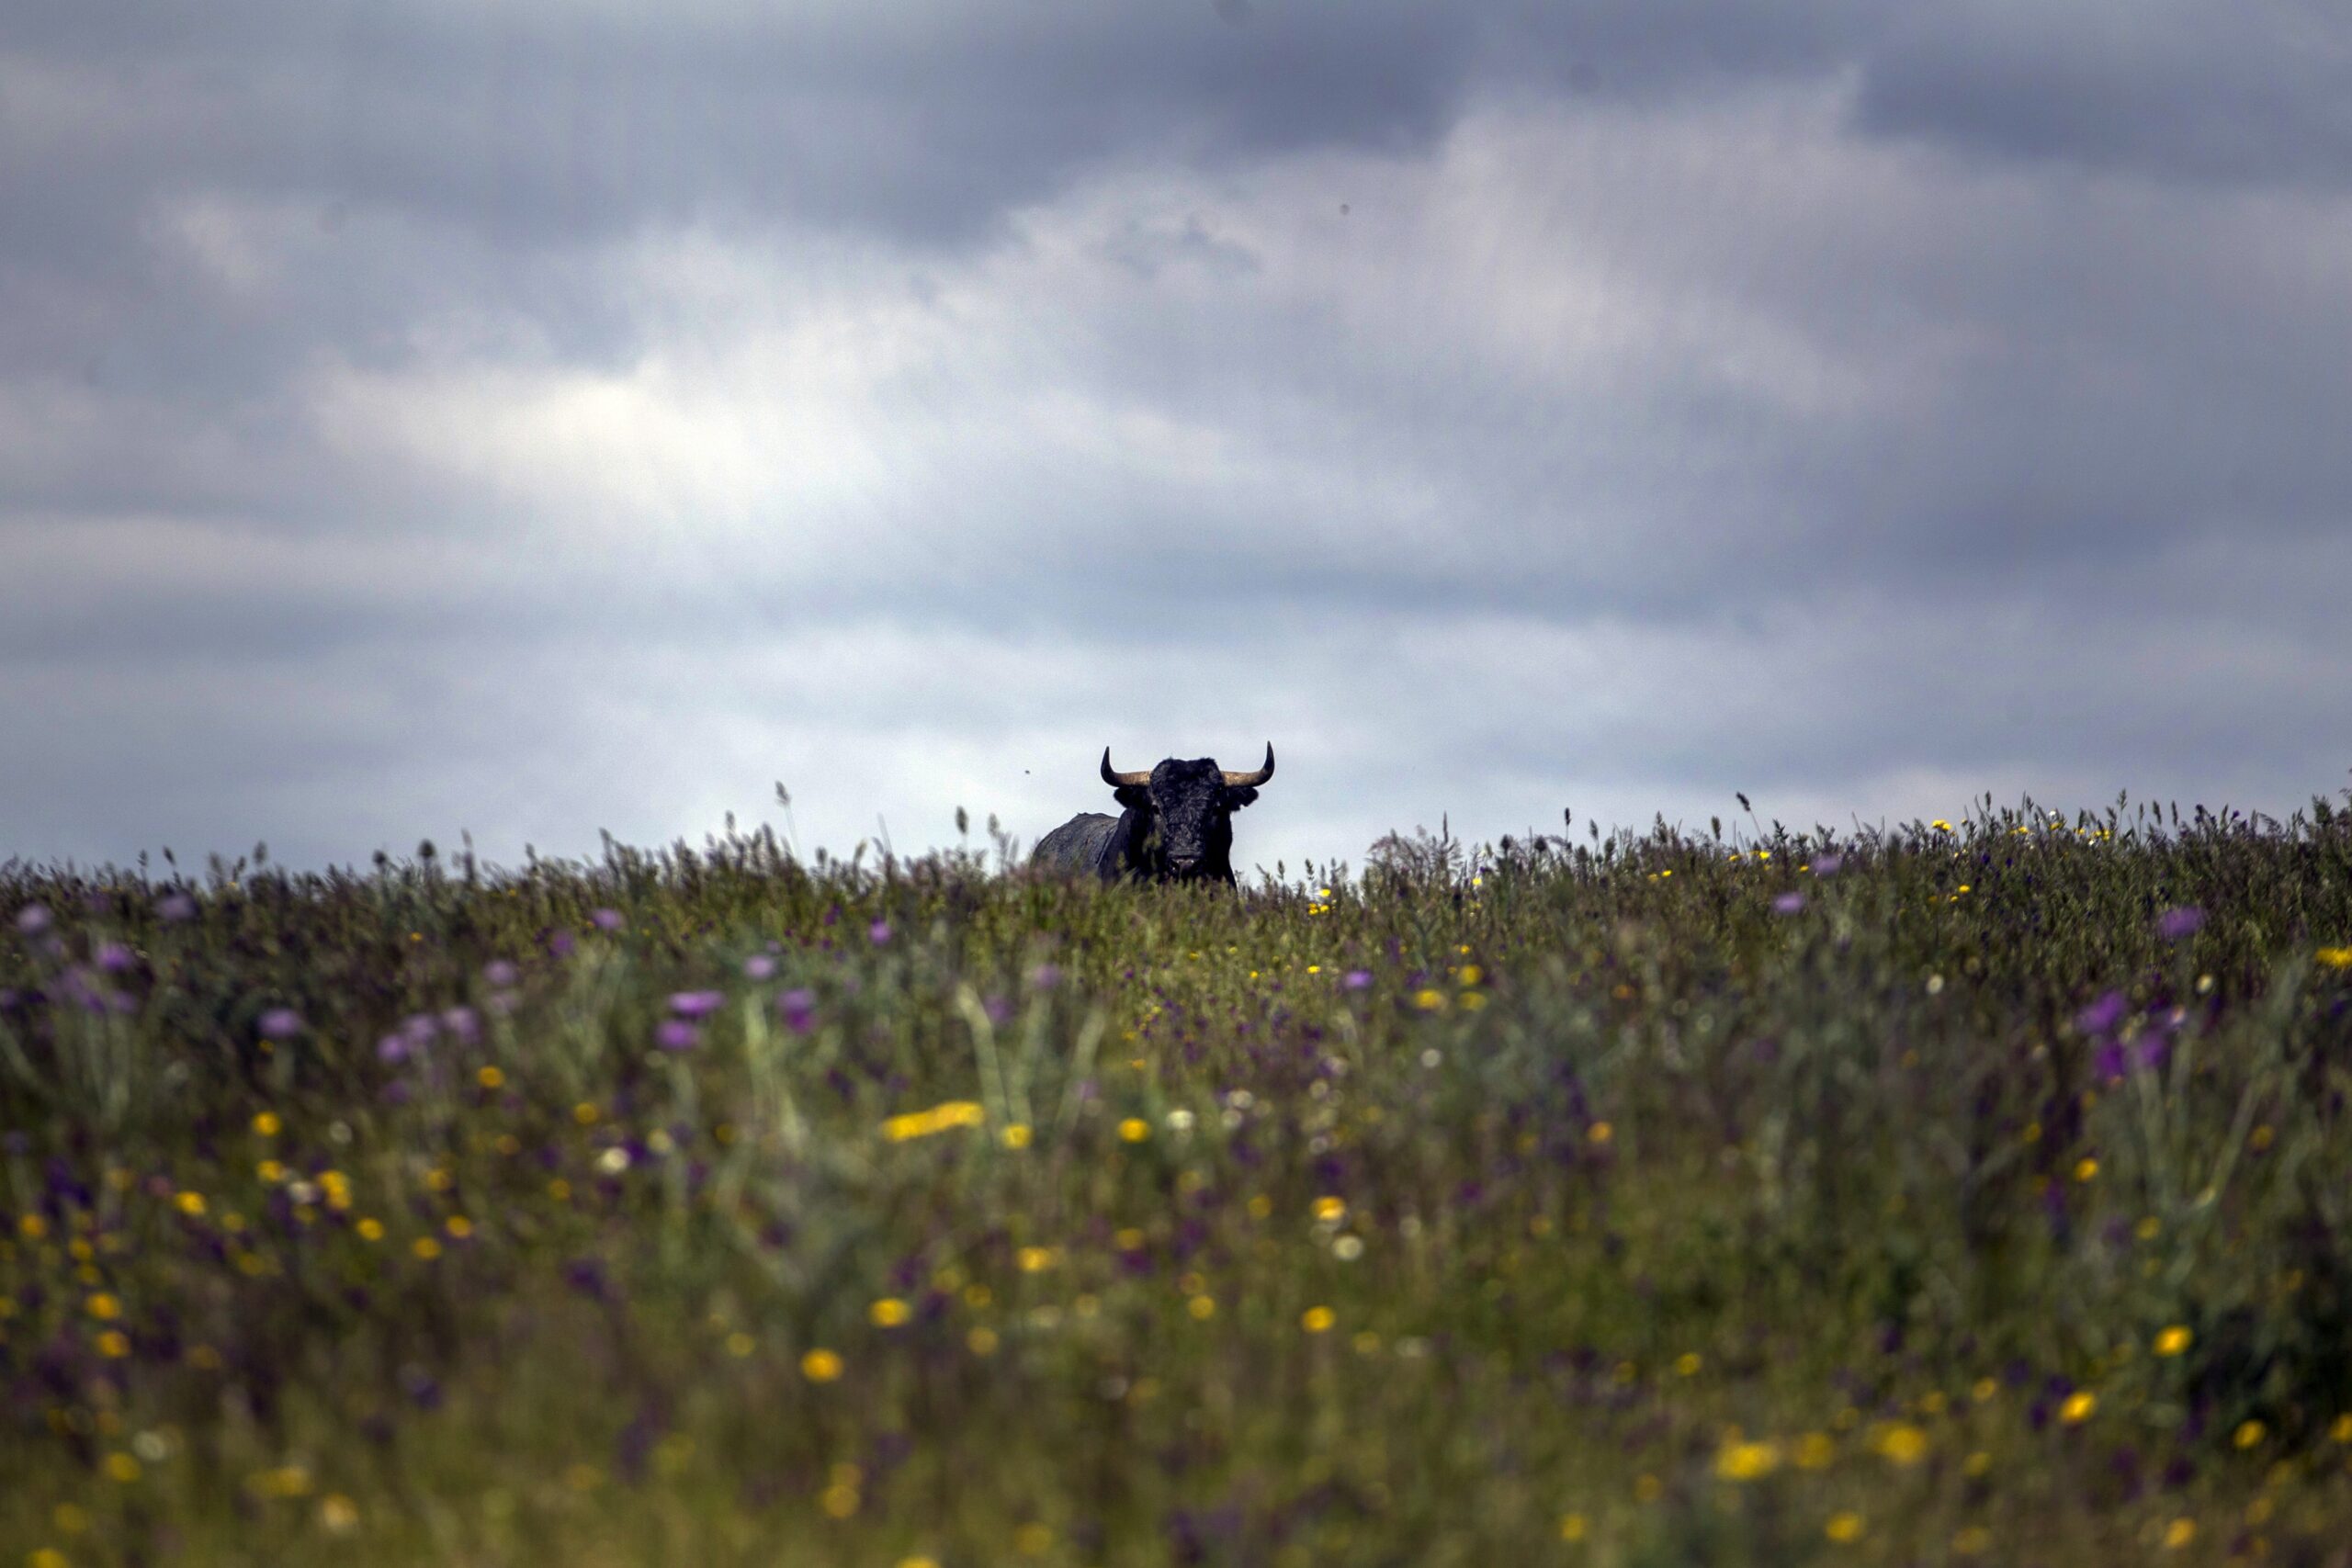 A bull in a field